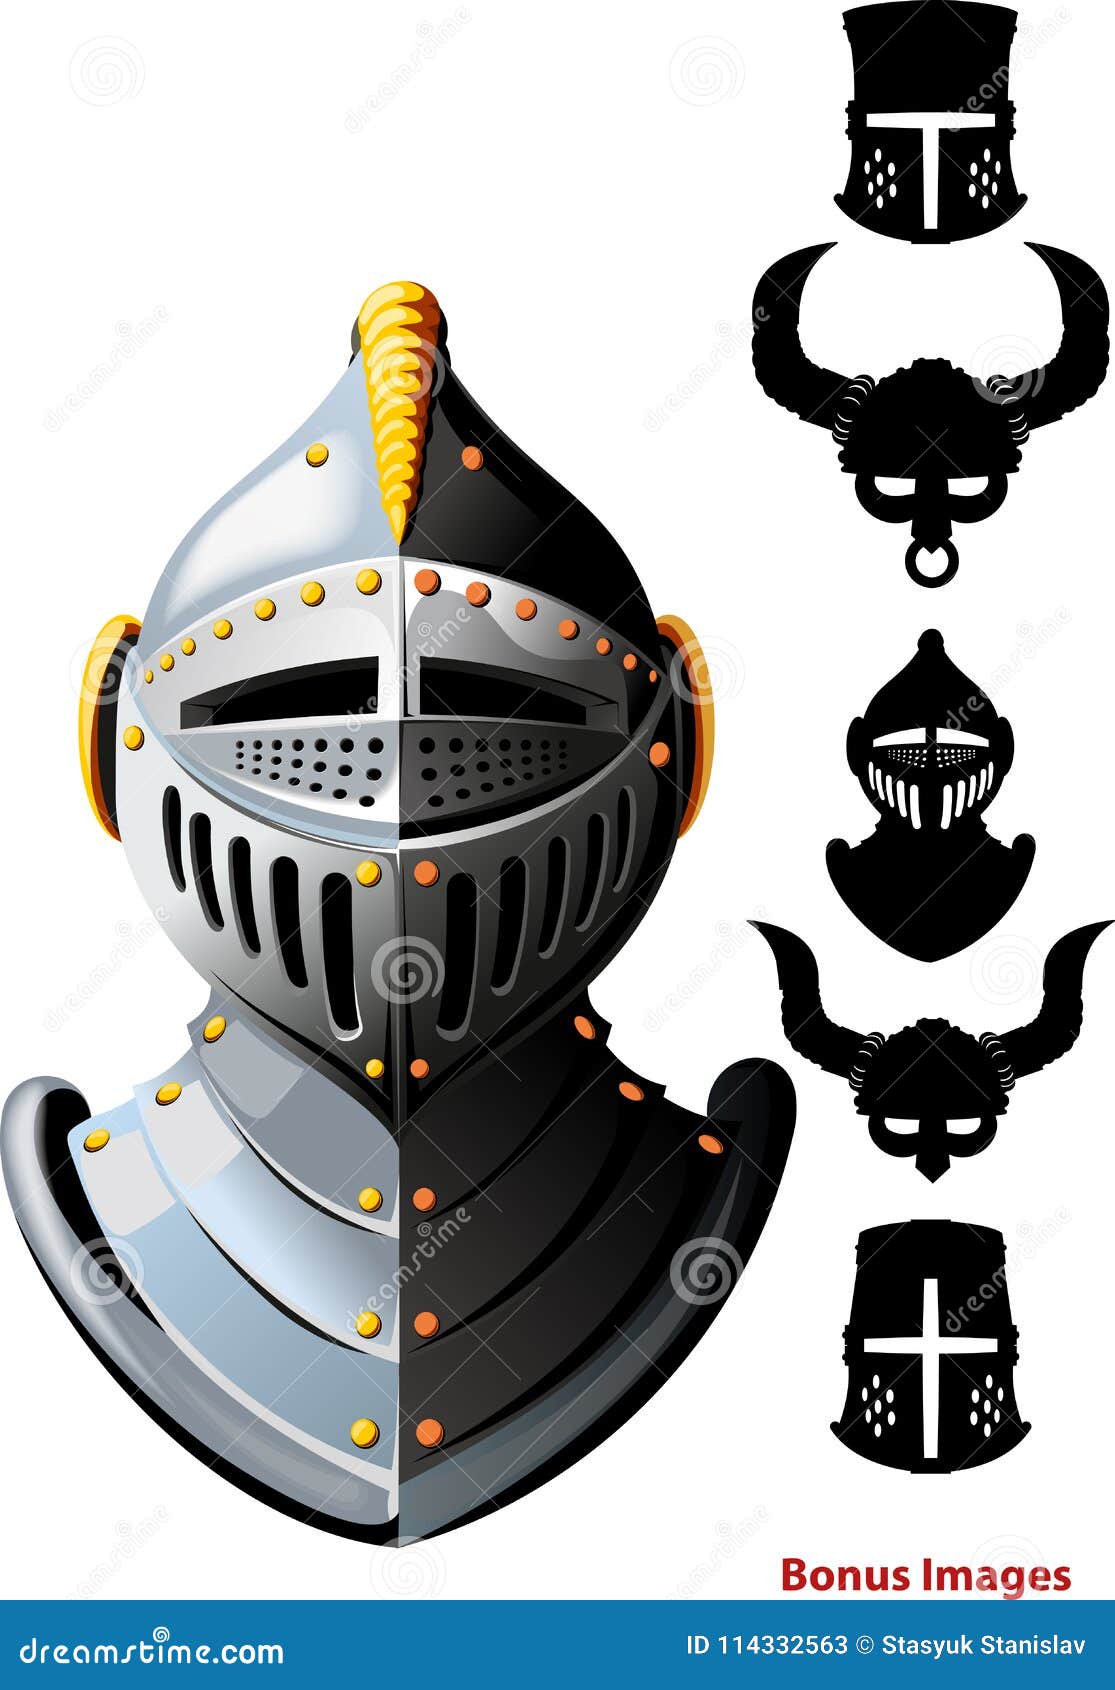 knight helmet silhouette